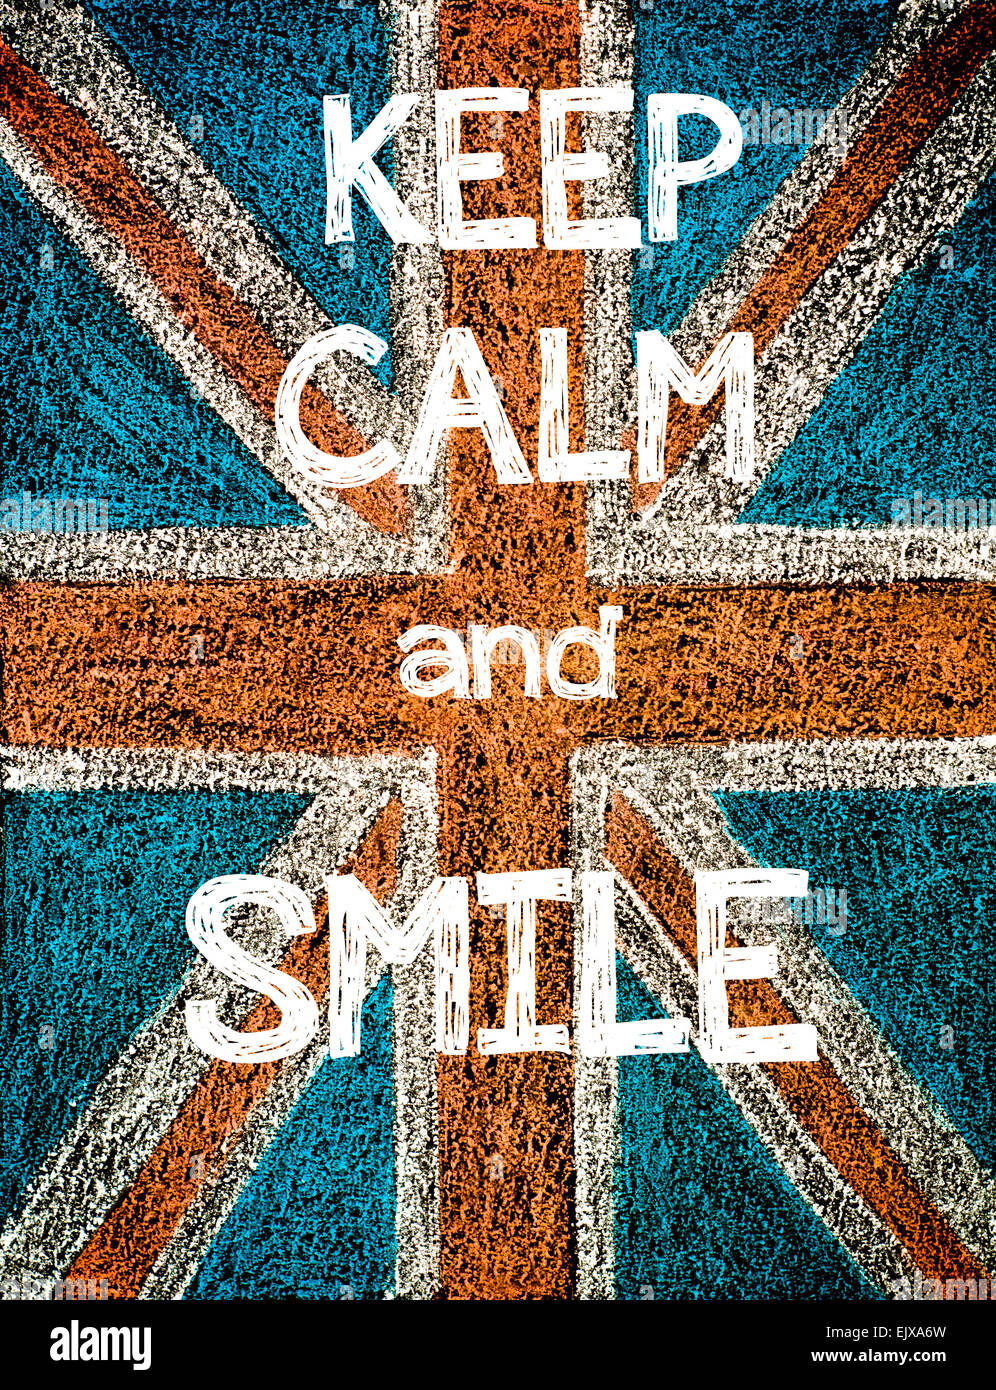 Keep Calm and Smile. United Kingdom (British Union jack) flag, vintage hand drawing with chalk on blackboard, humor concept image Stock Photo